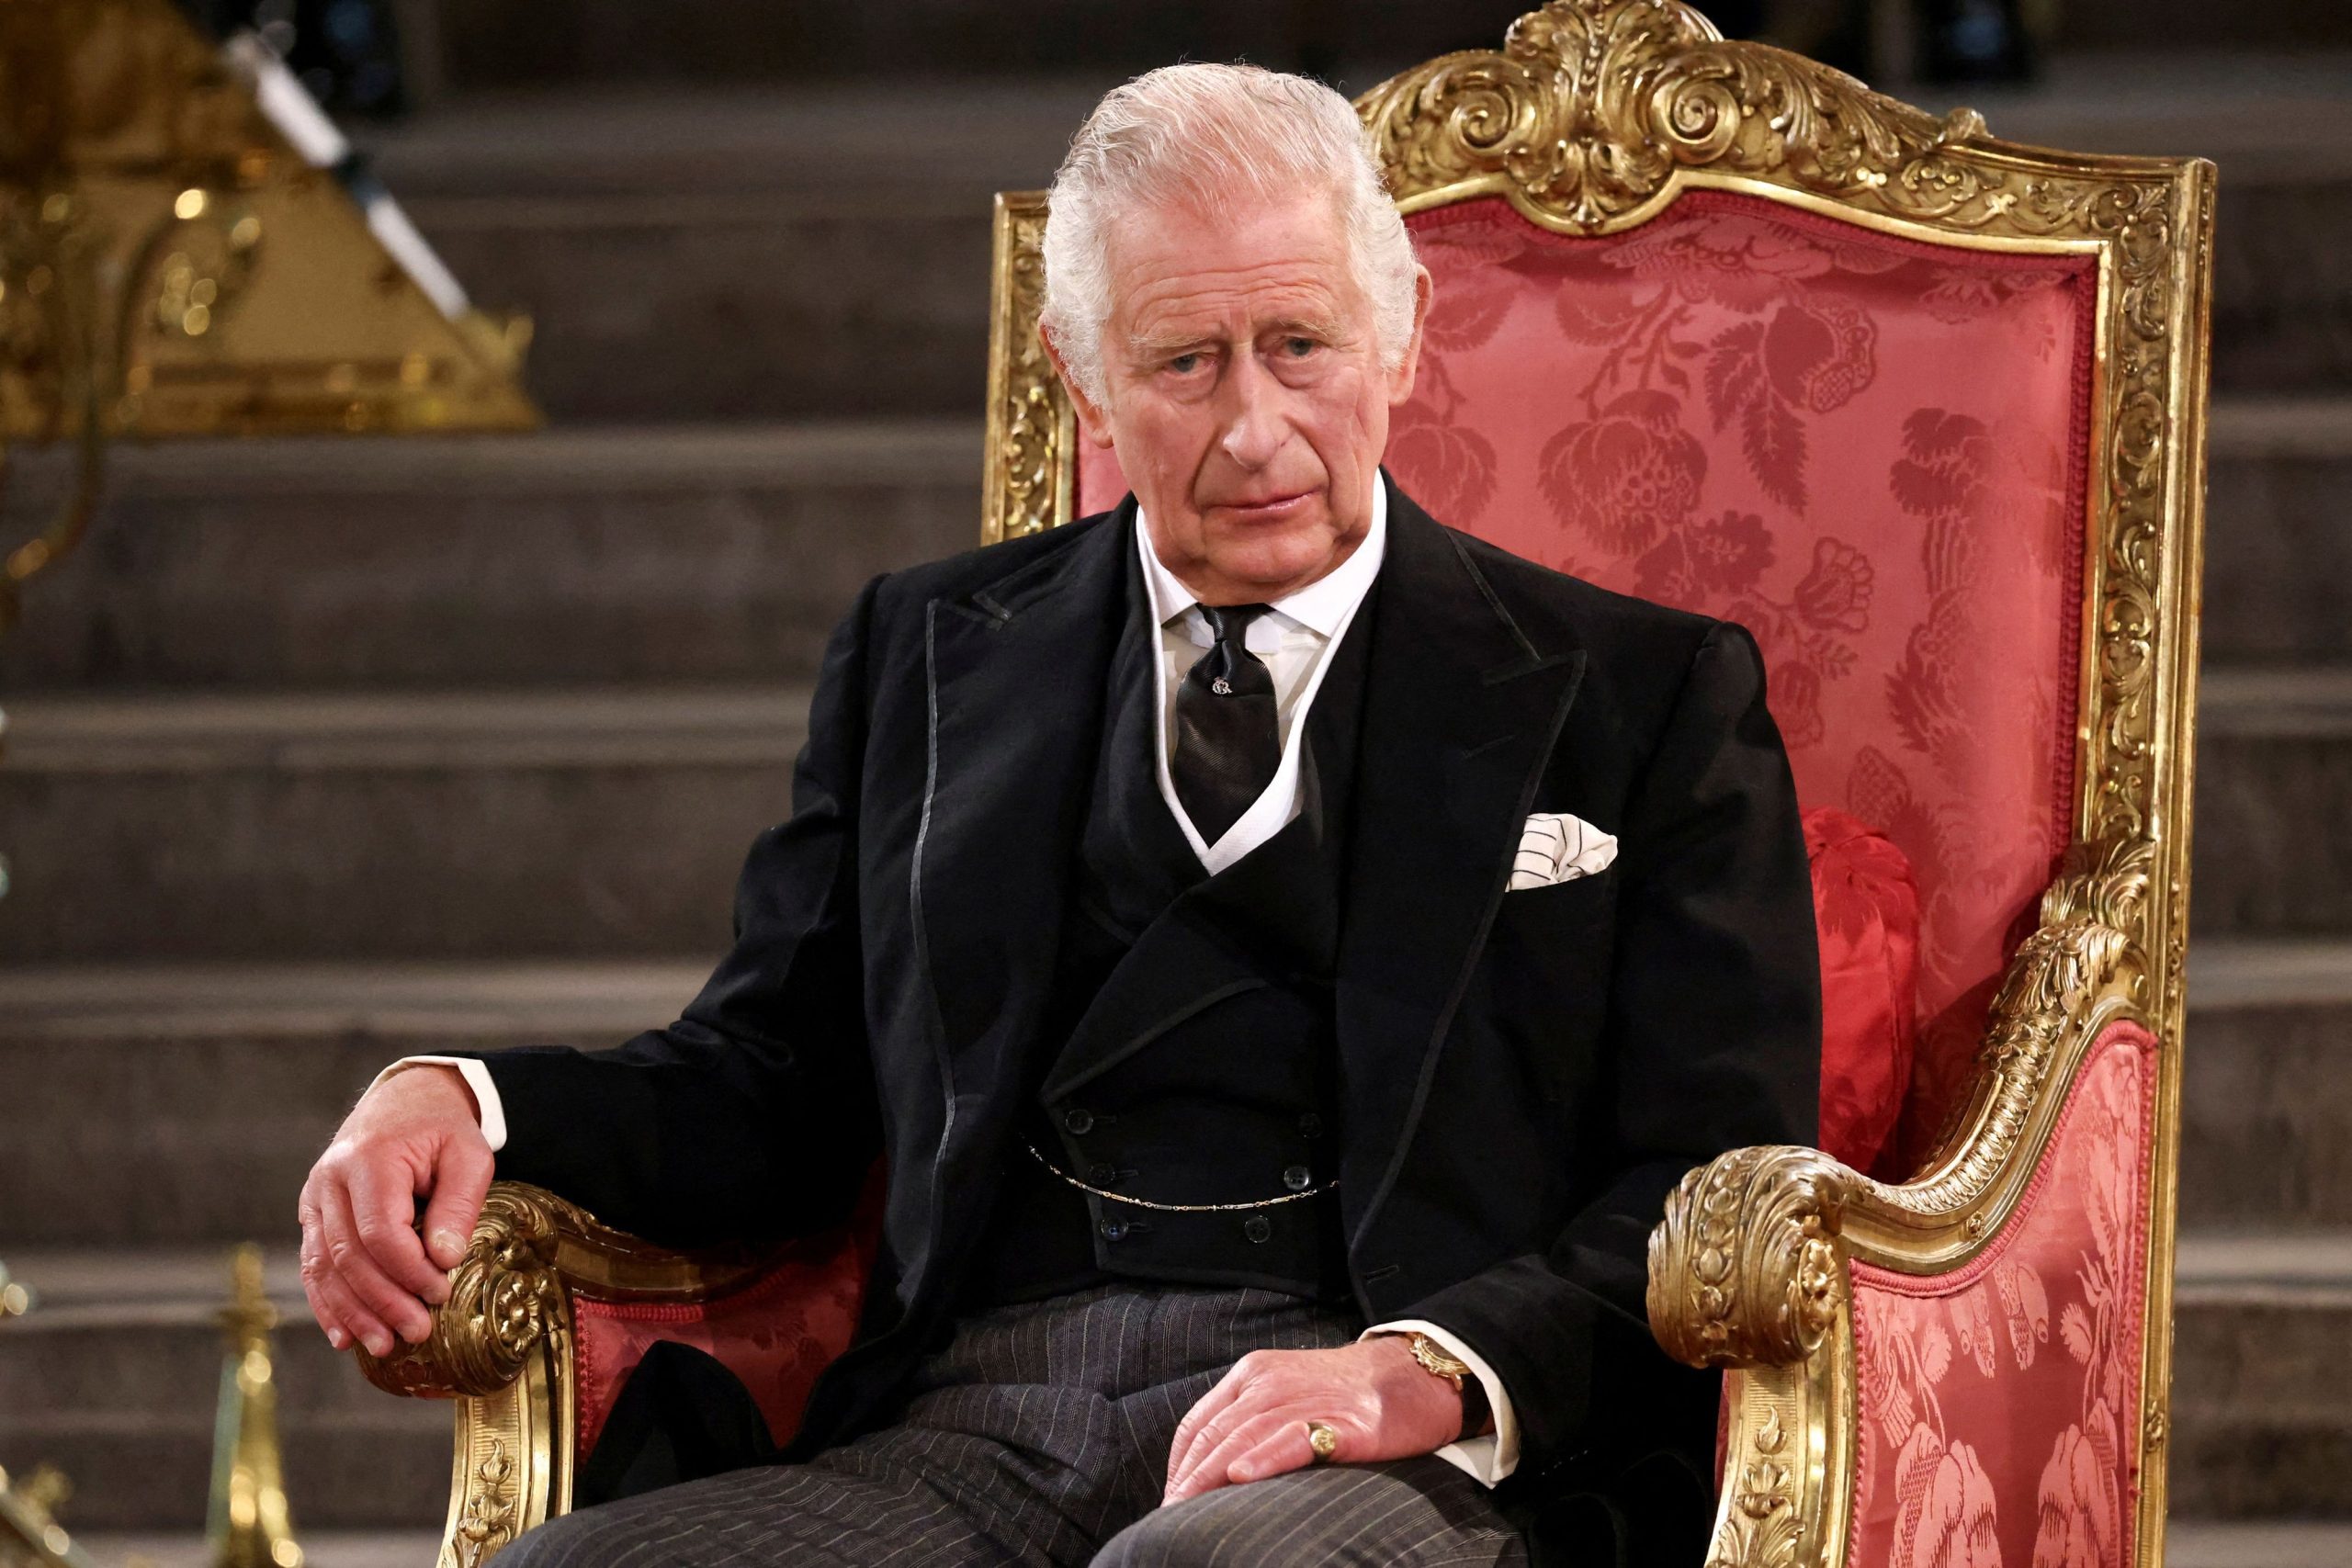 Charles III Becomes King of England Today